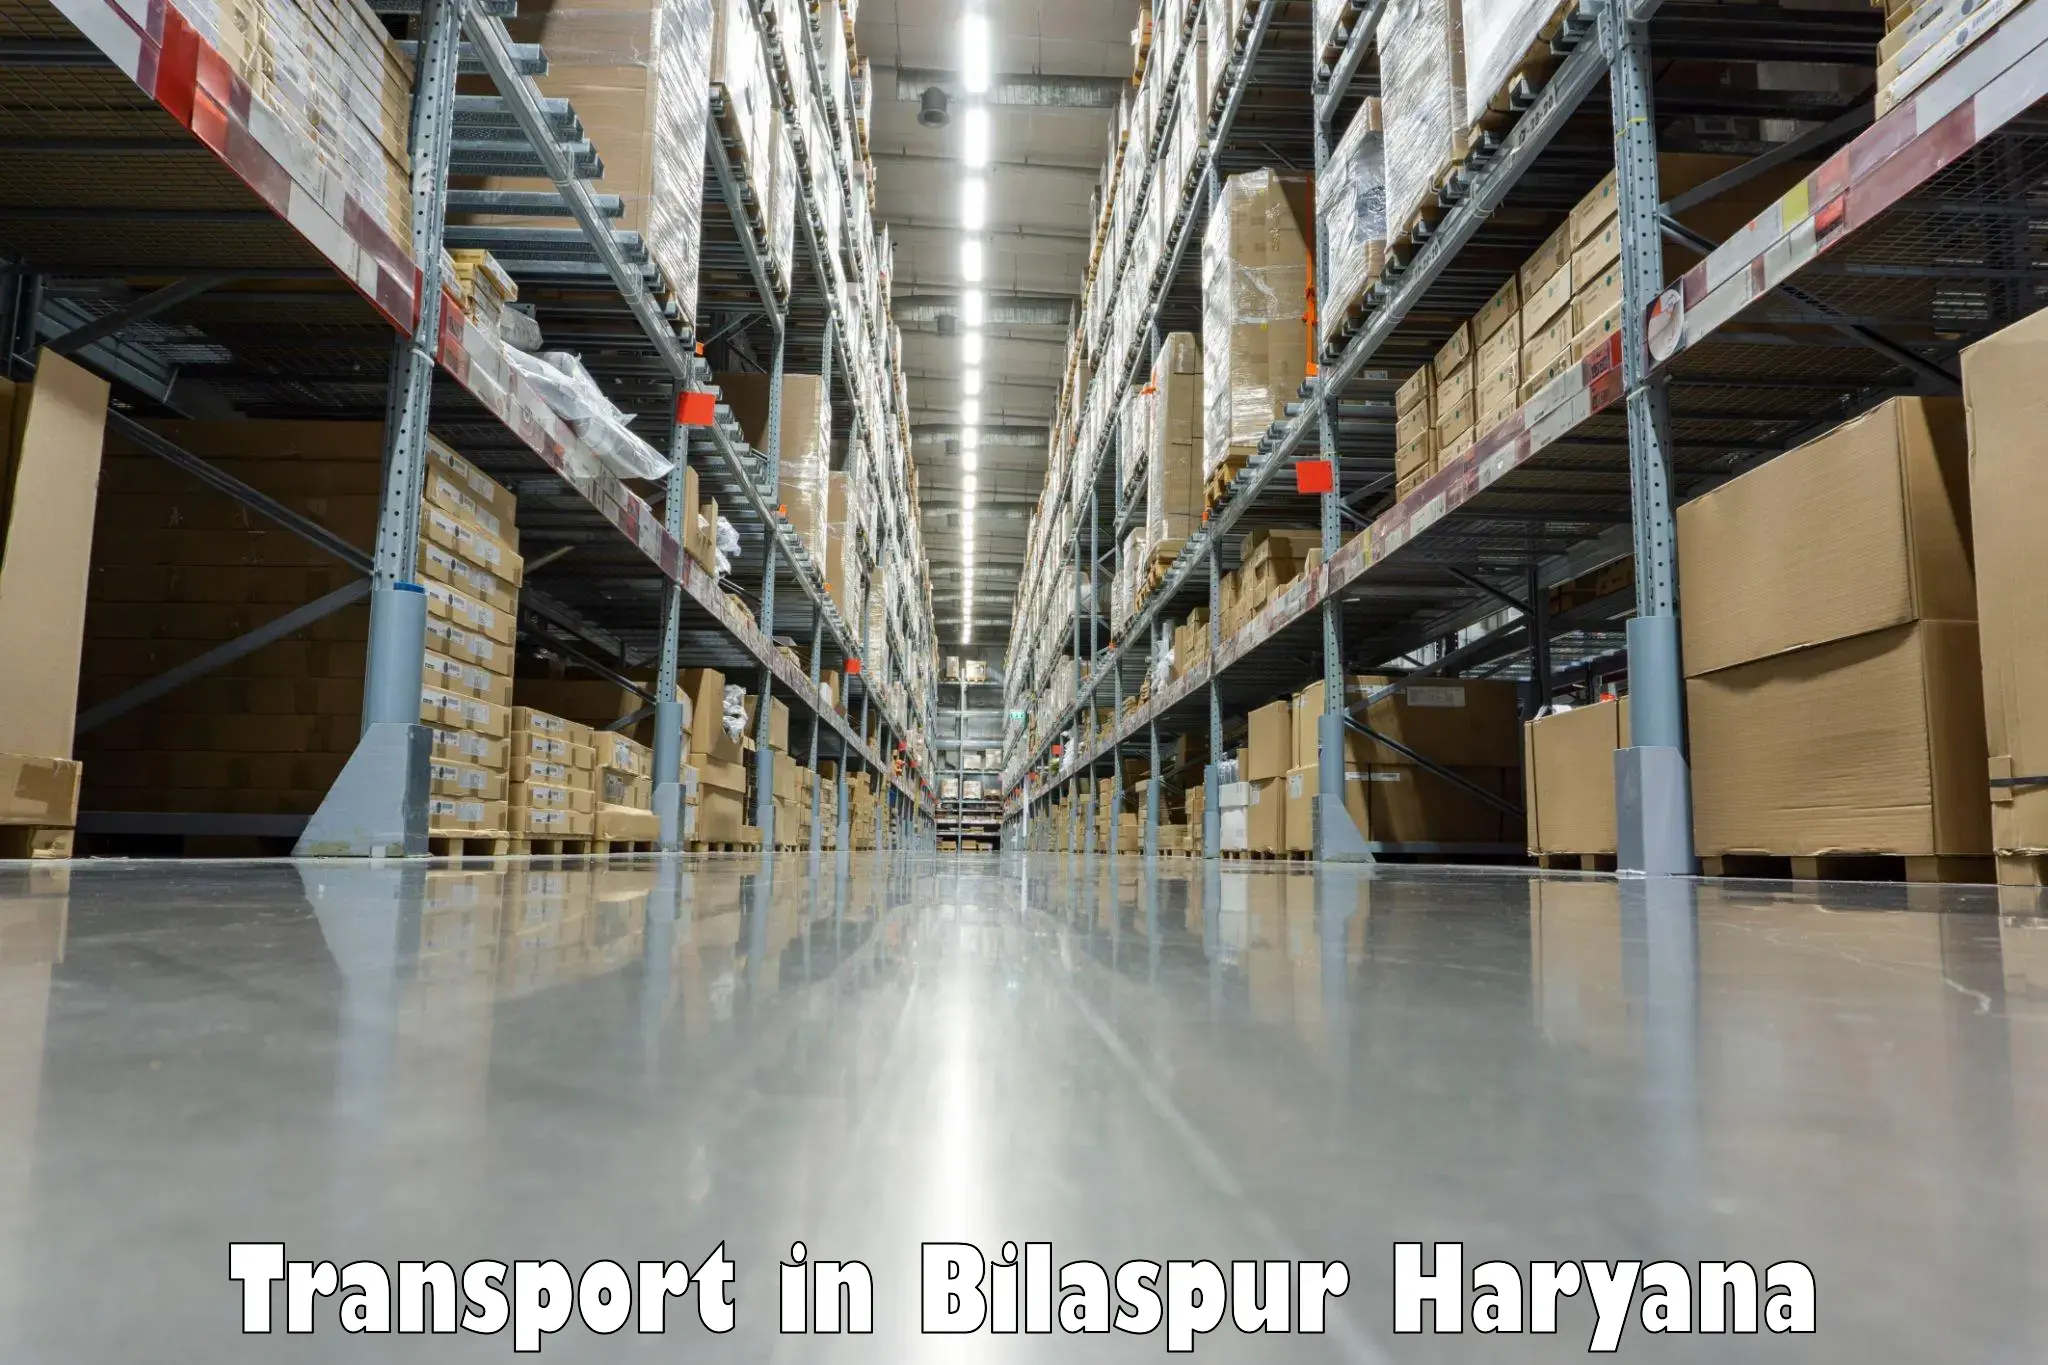 Daily parcel service transport in Bilaspur Haryana